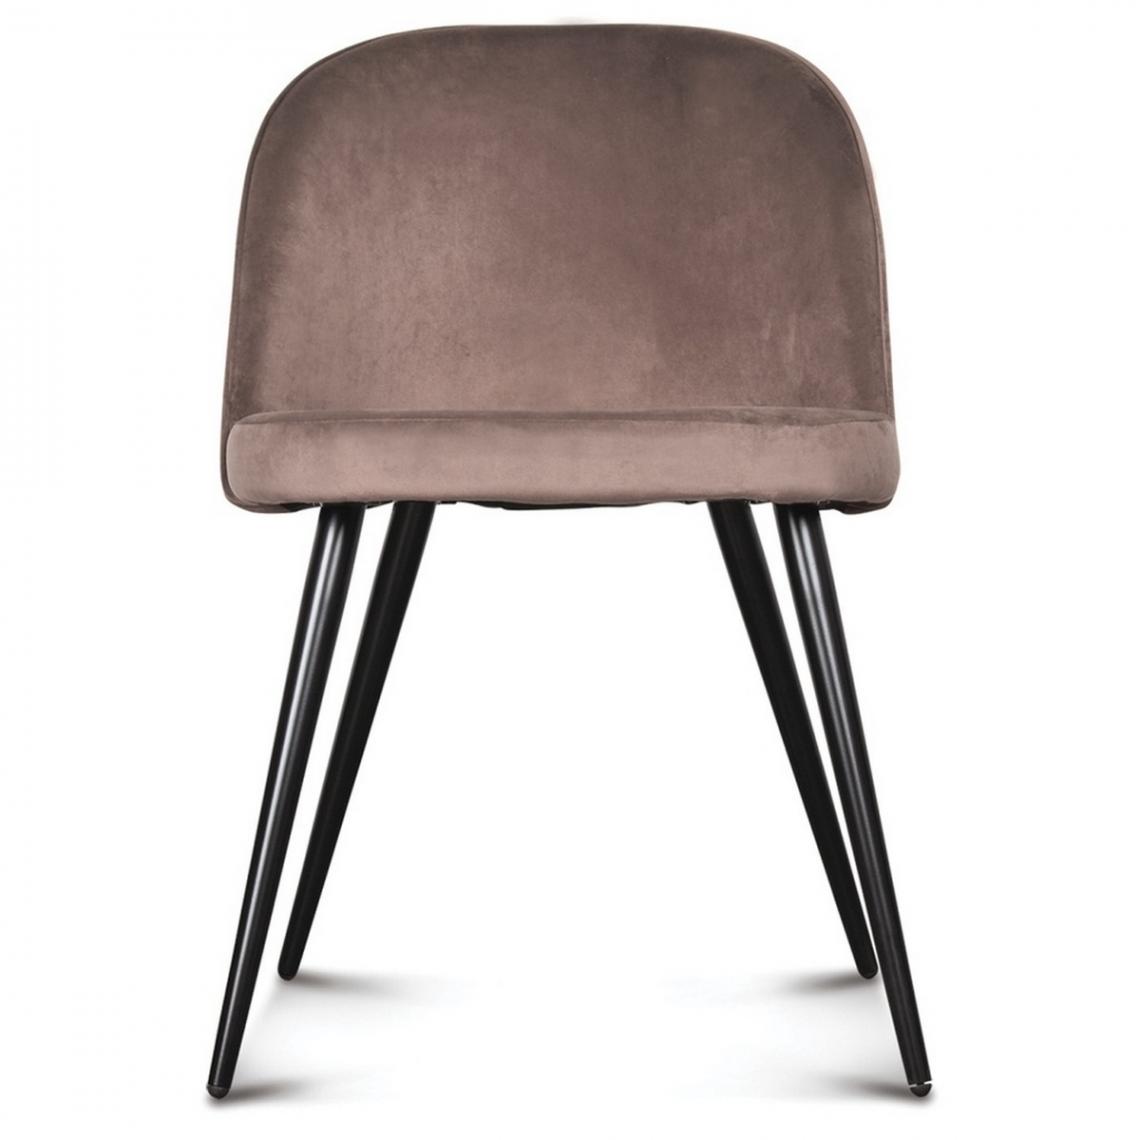 chaise-dossier-arrondi-terracotta-pietement-noir-dandy_1193279-4_1140x1140